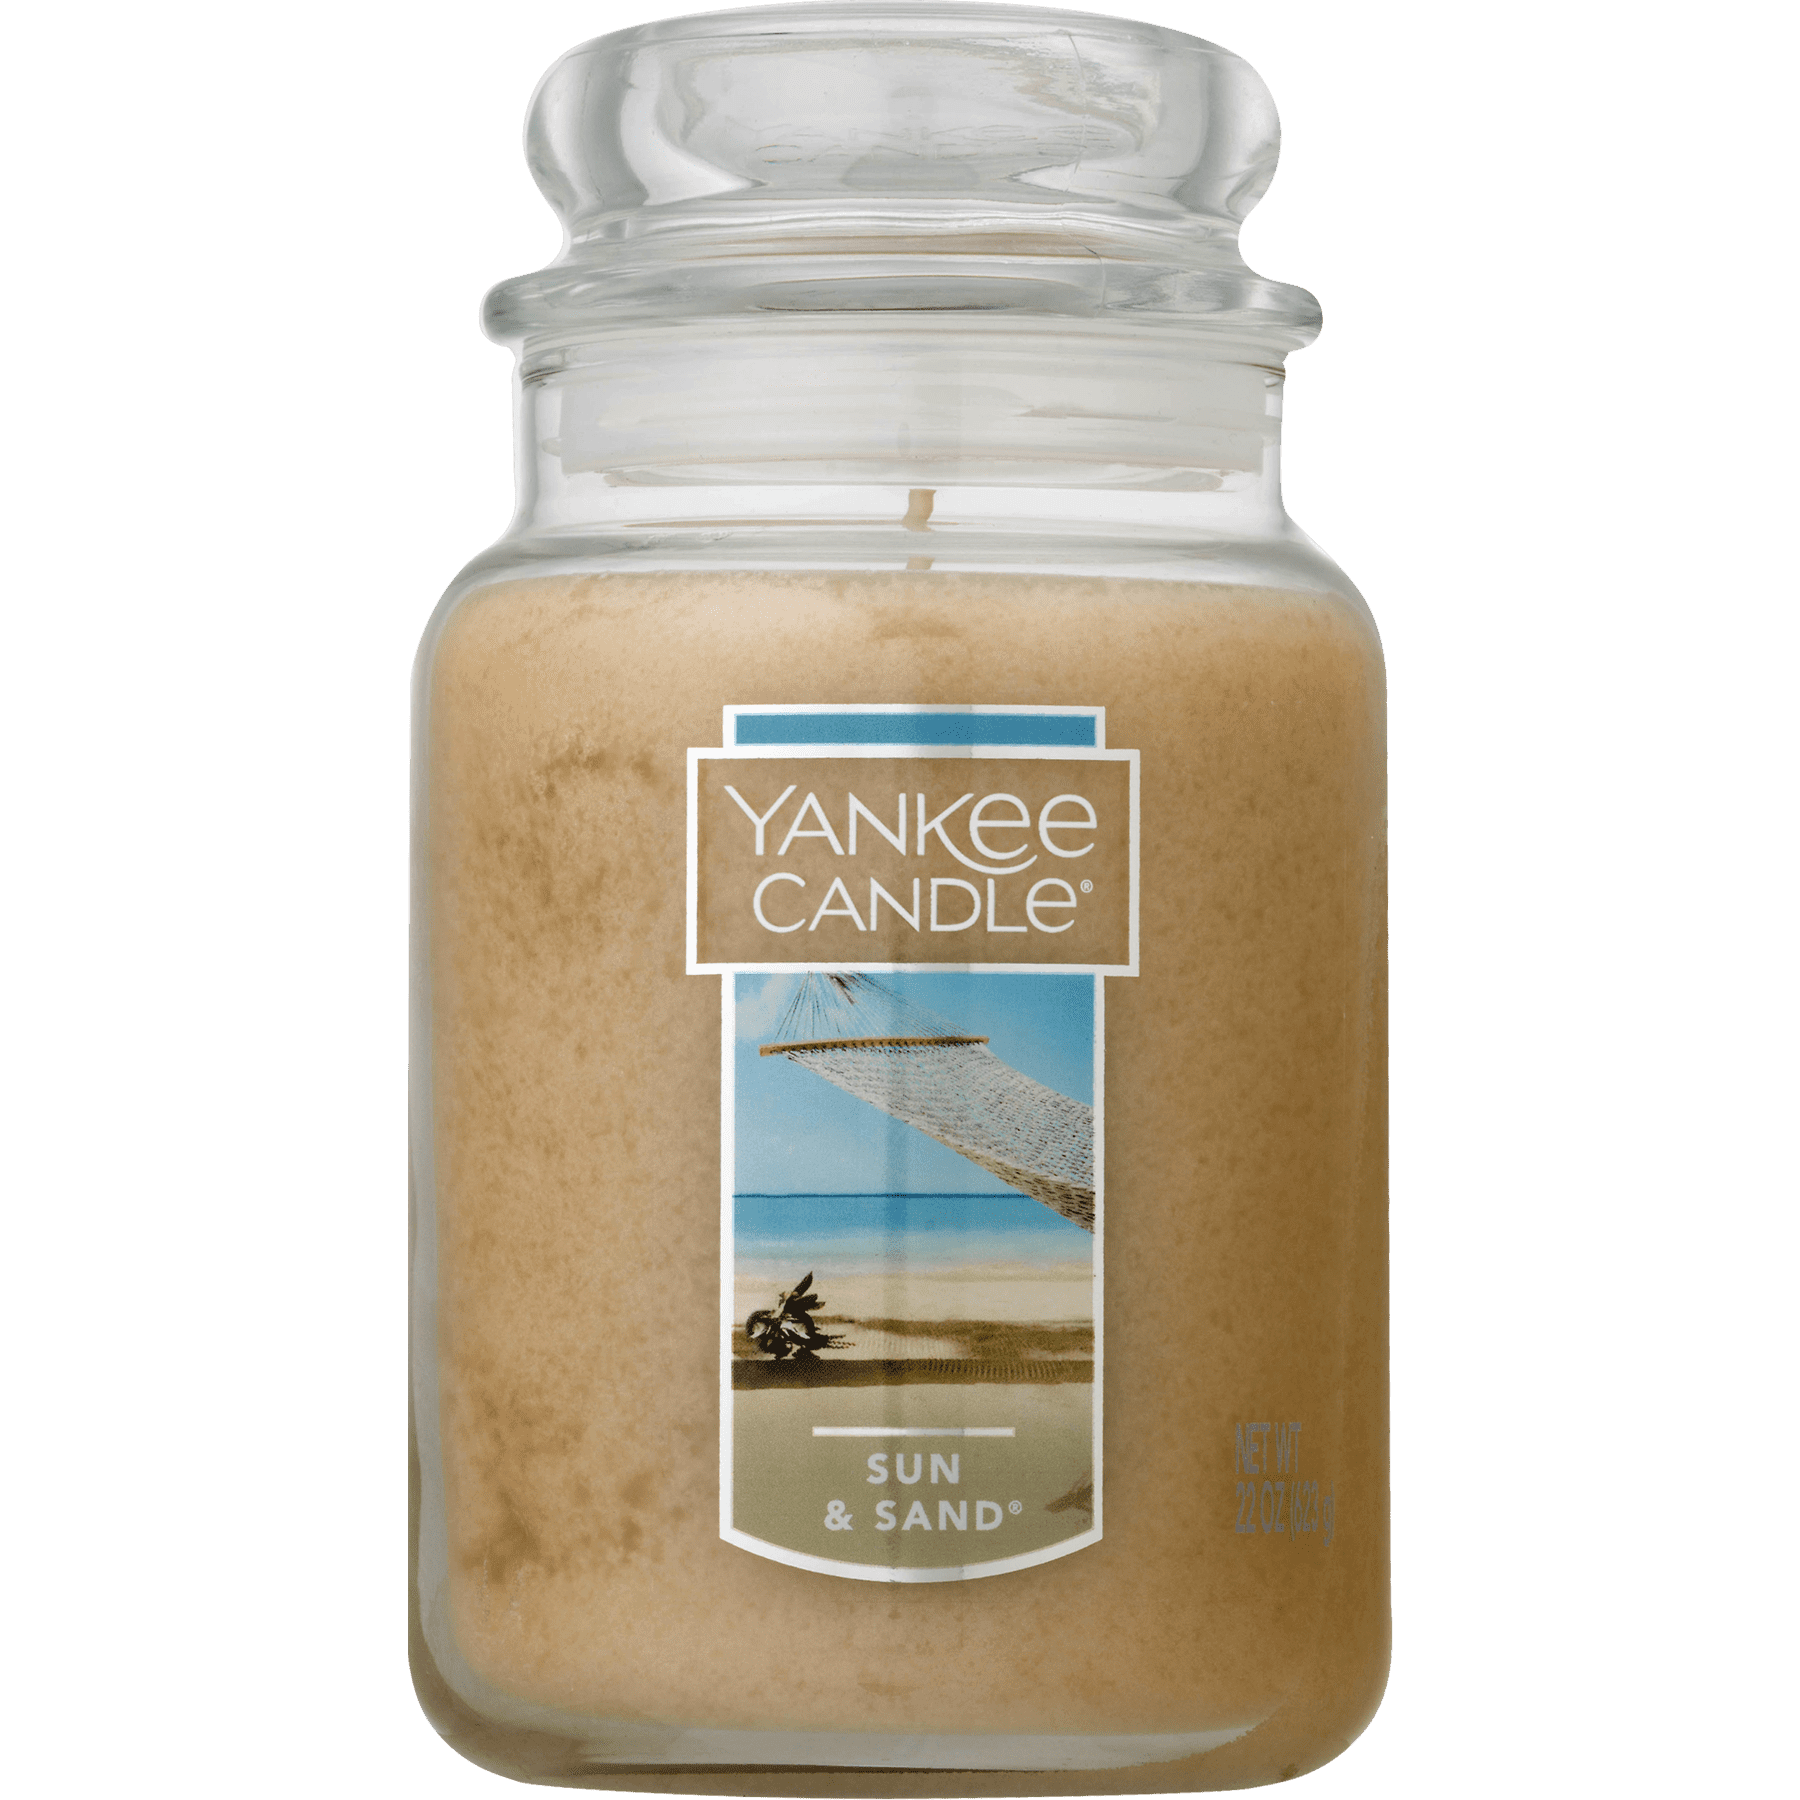 Yankee Candle 12oz Medium Pillar BEACH SCENE LIMITED EDITON PINK SANDS SCENT NEW 